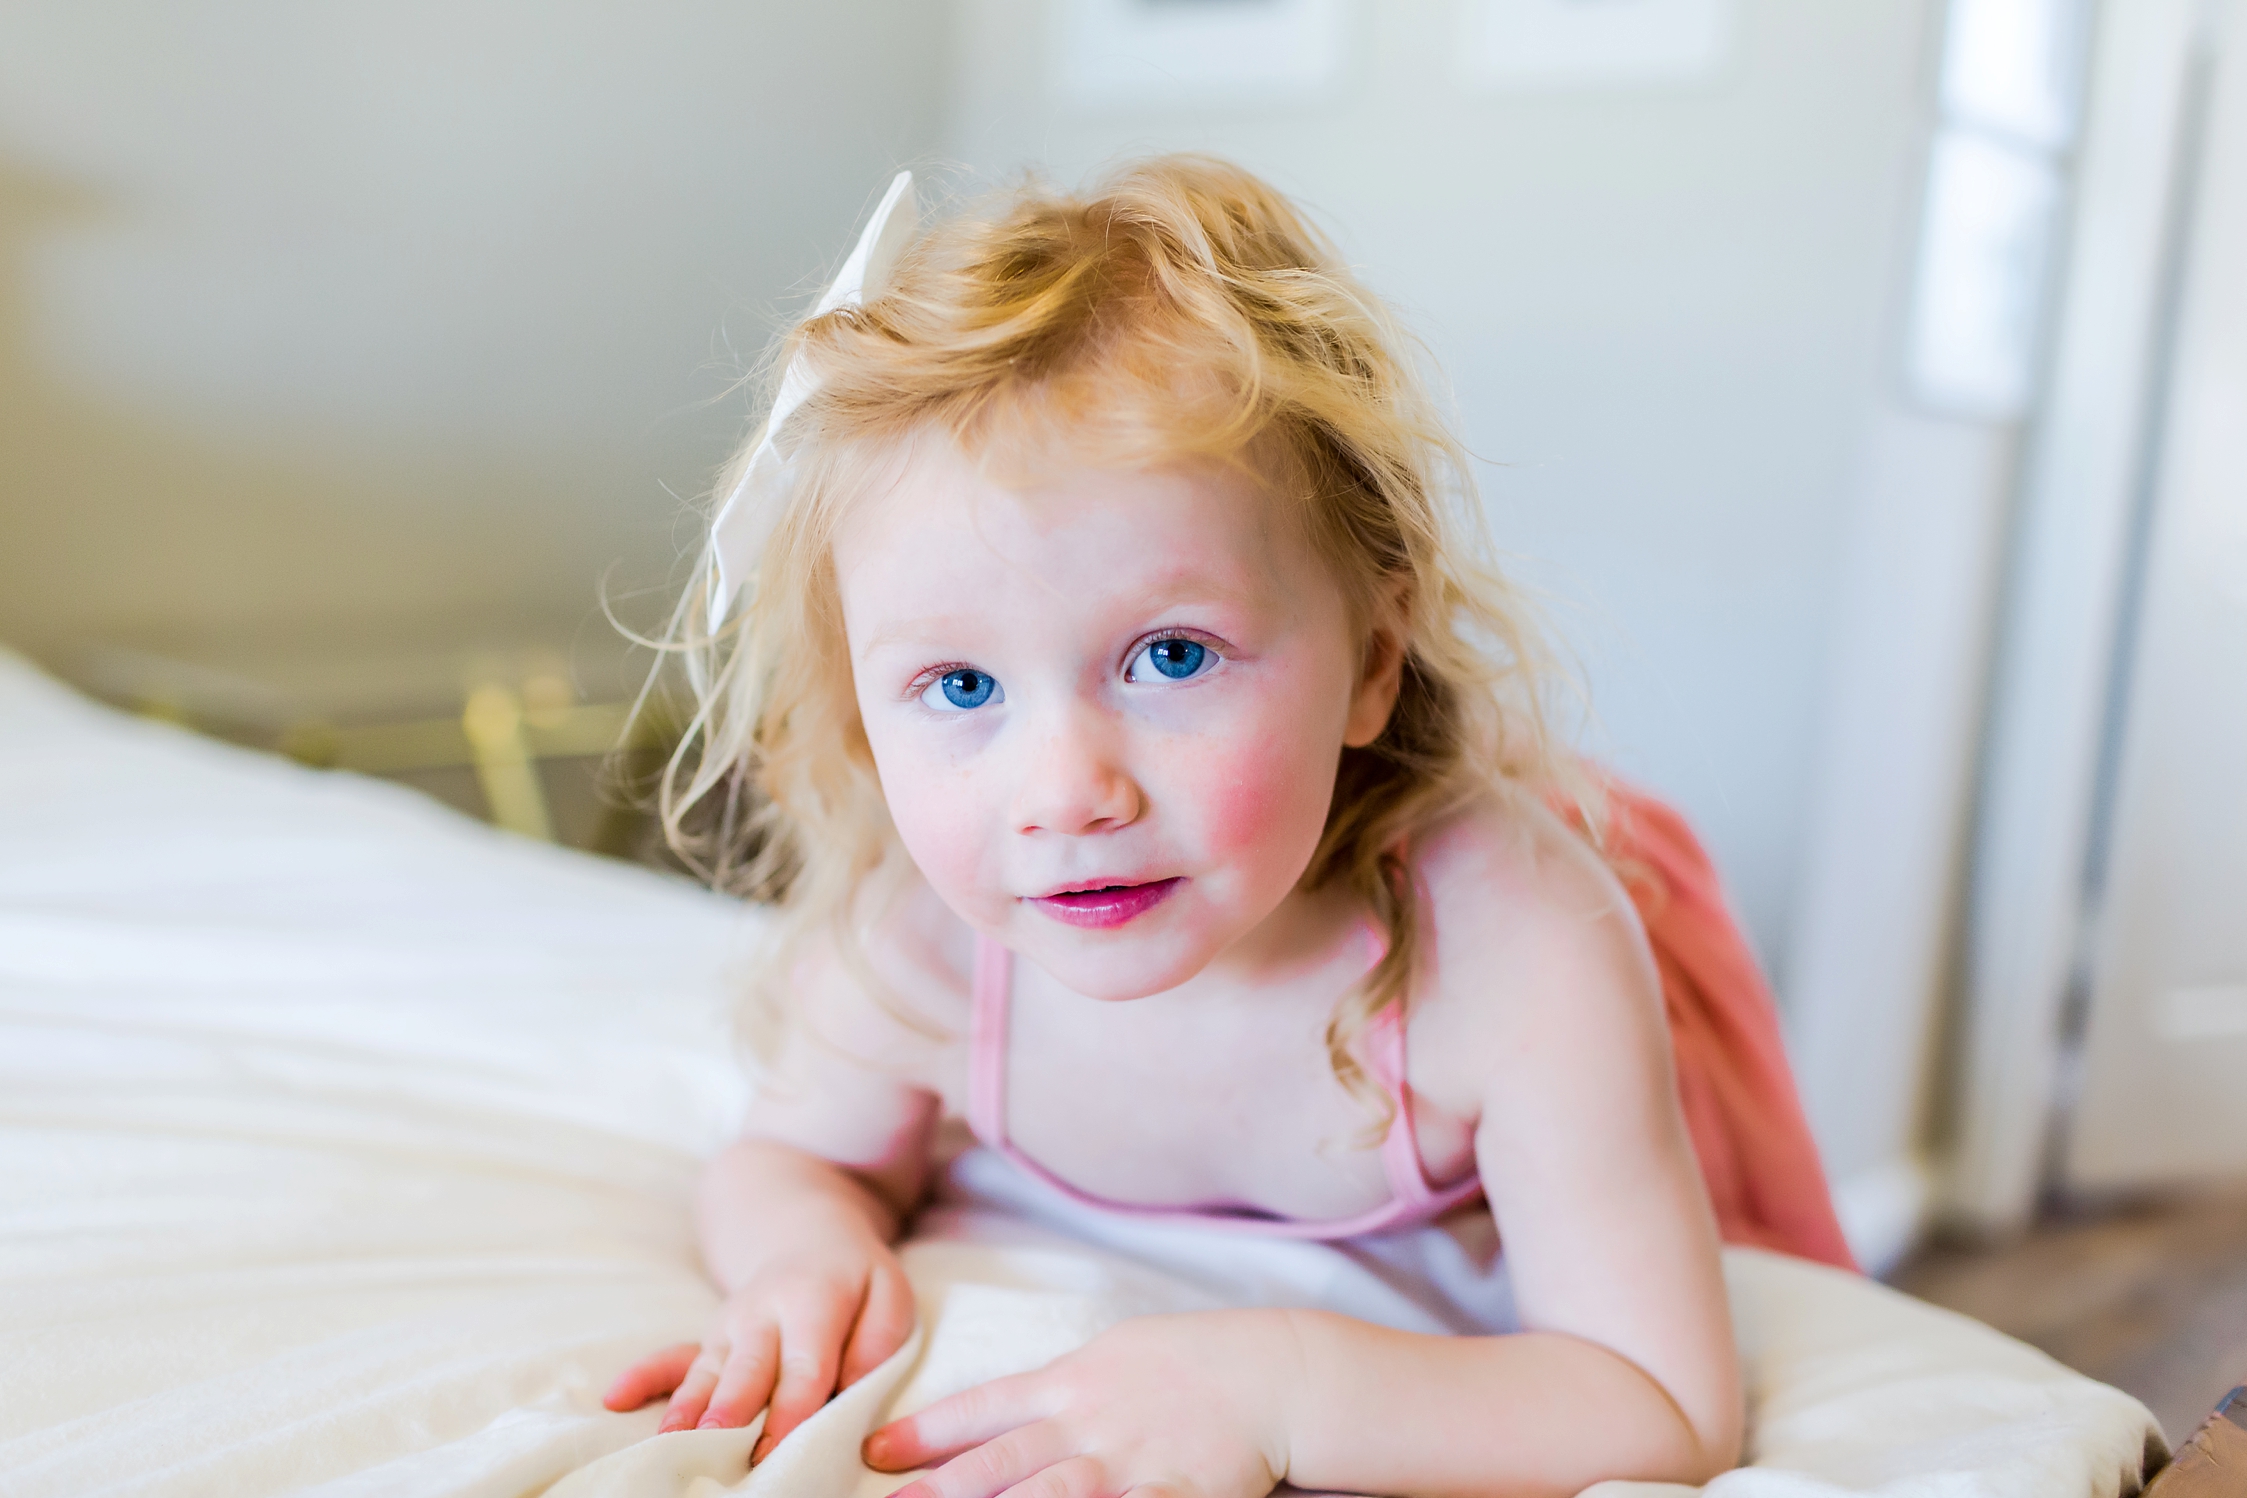 6 secrets to capturing authentic portraits of your children